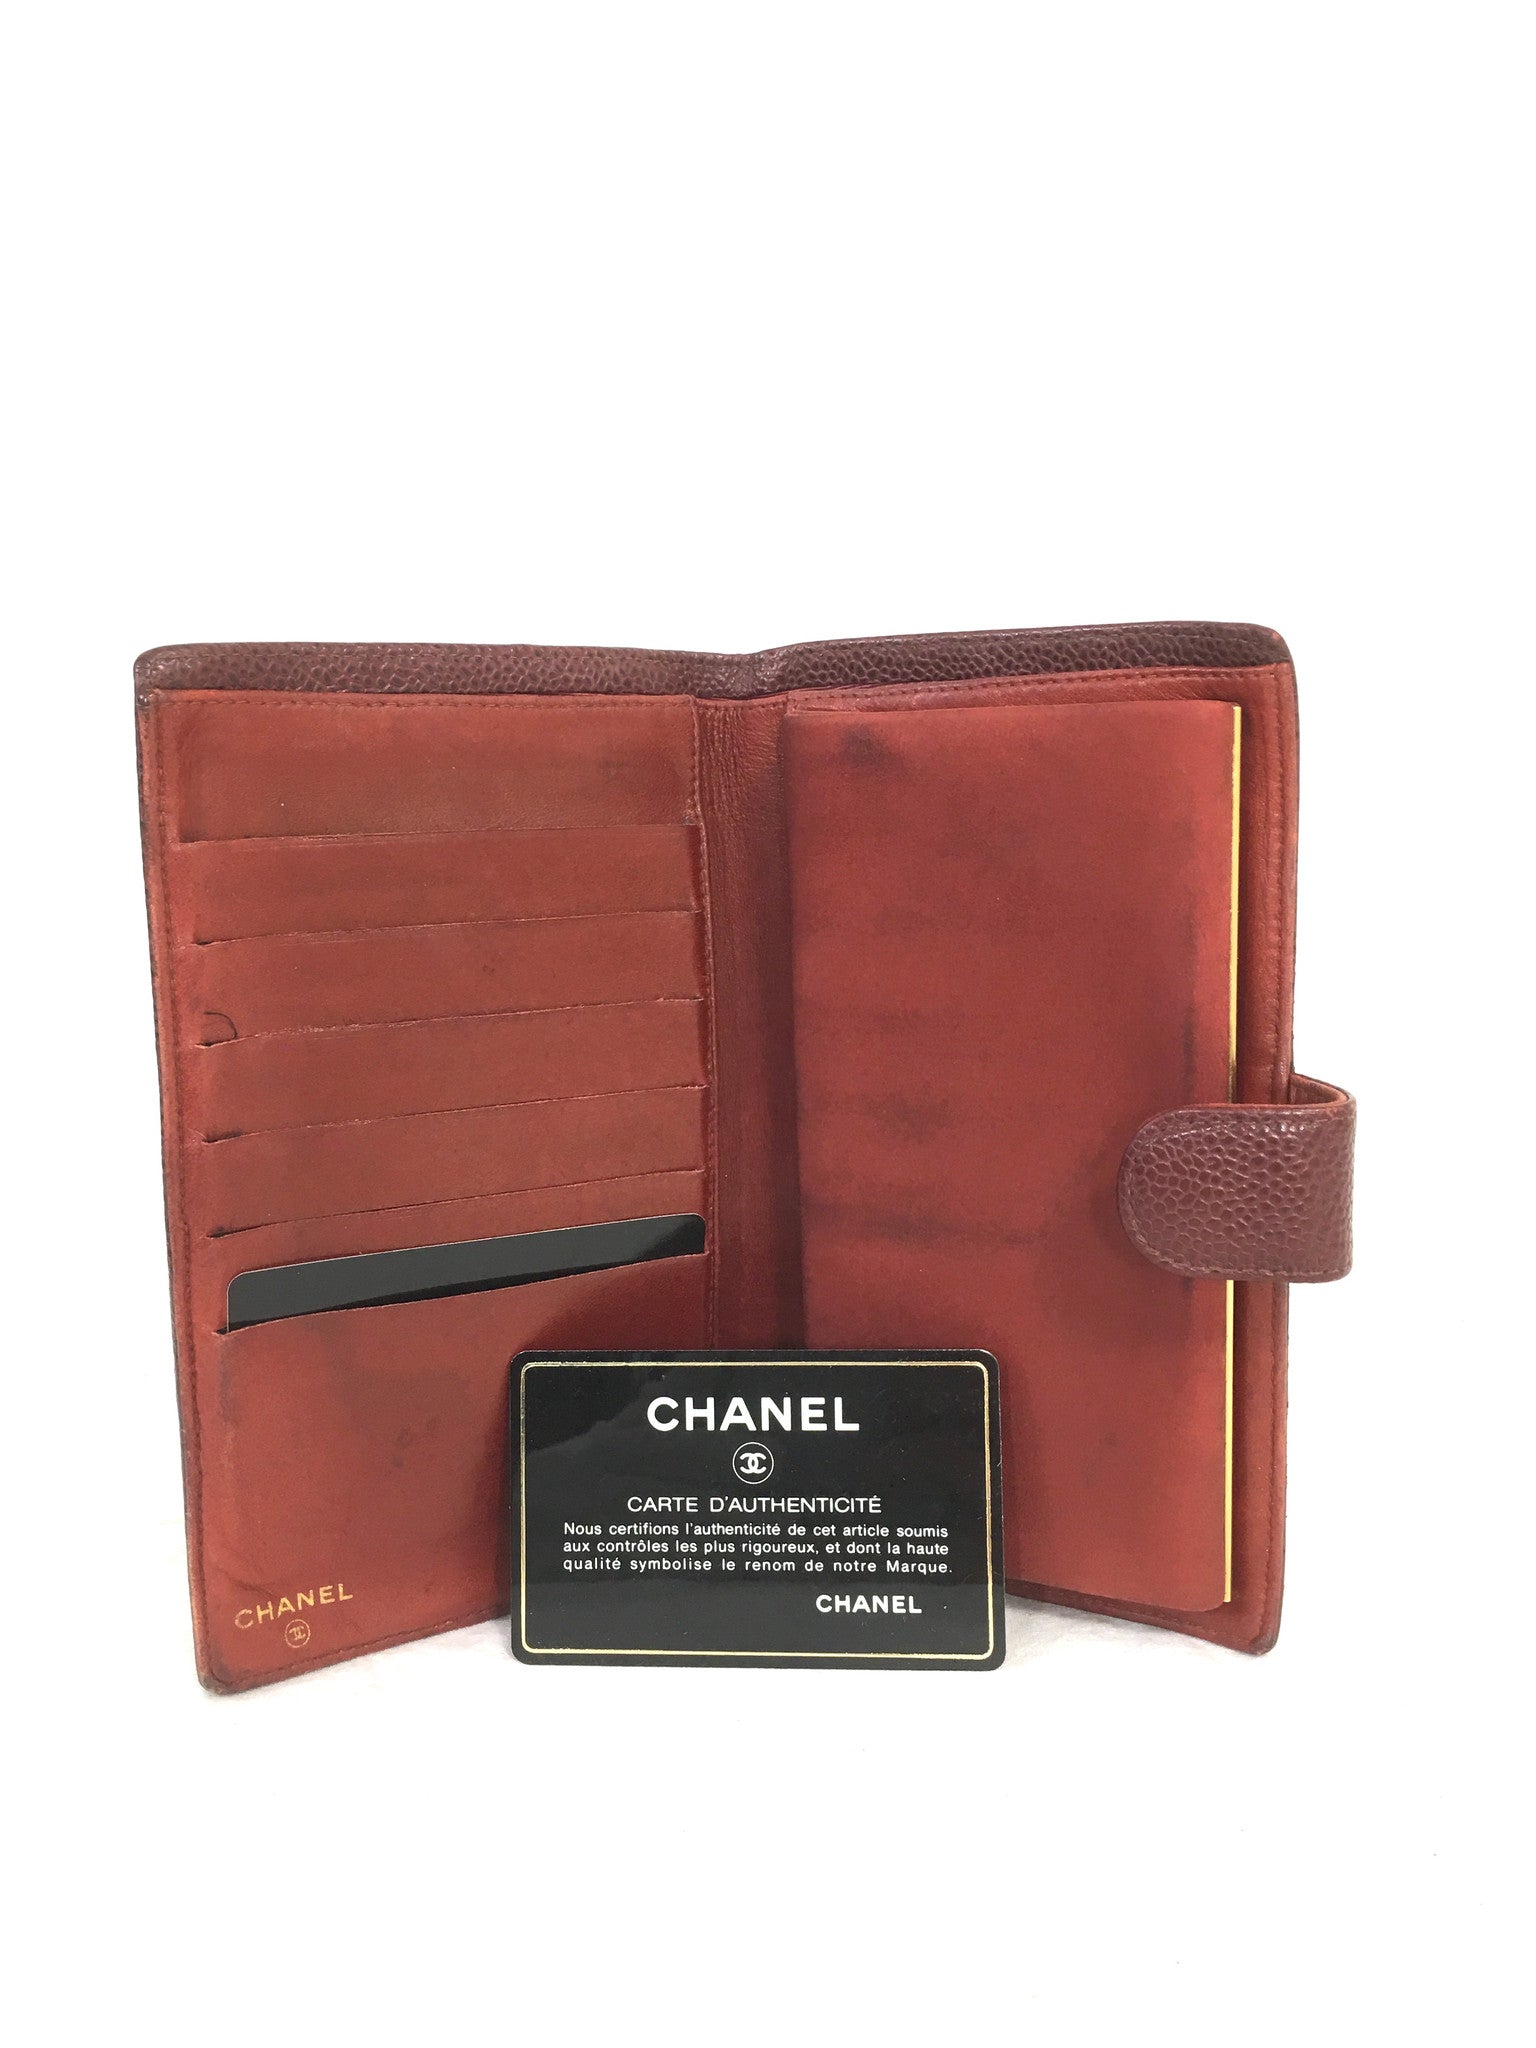 CHANEL Long Wallet Bordeaux/Burgundy Leather